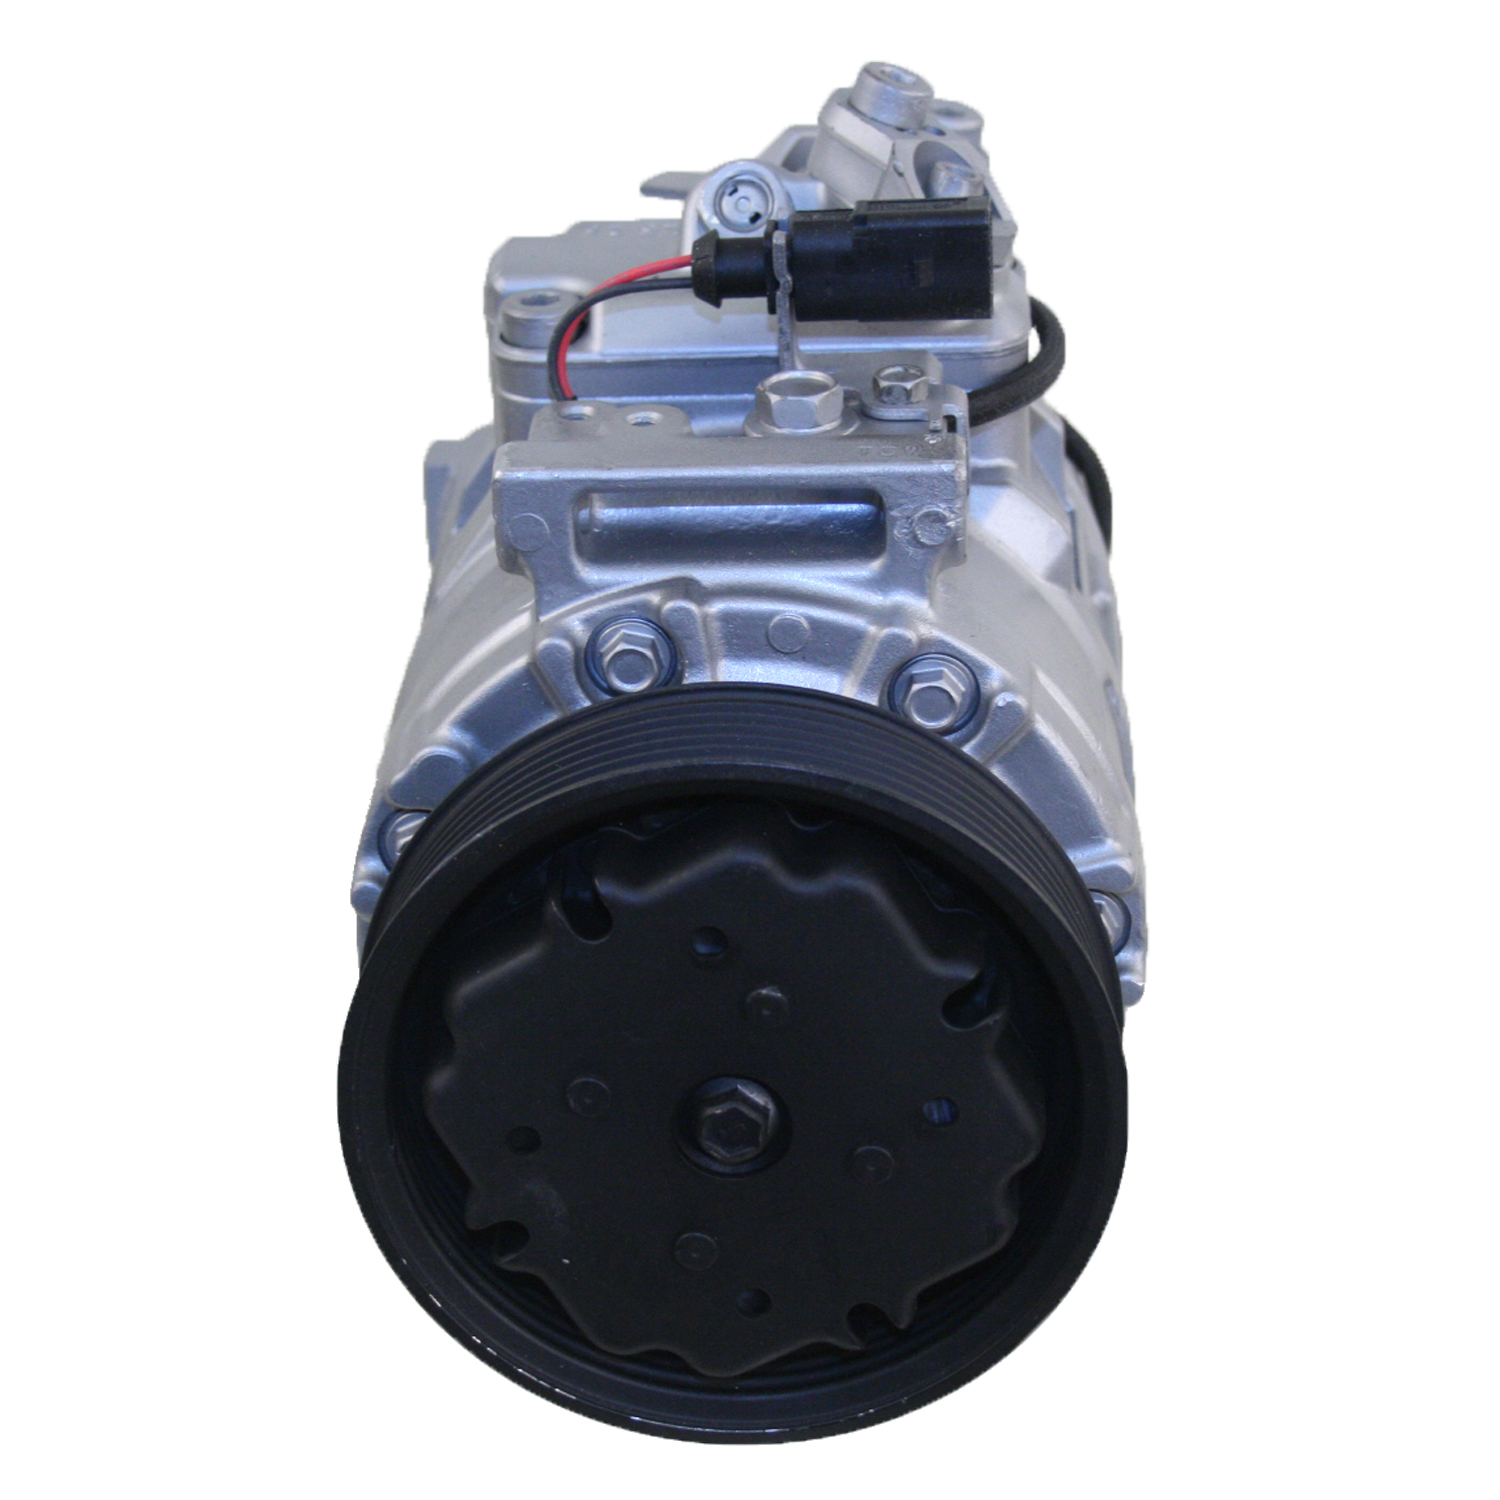 TCW Compressor 31733.601 Remanufactured Product Image field_60b6a13a6e67c